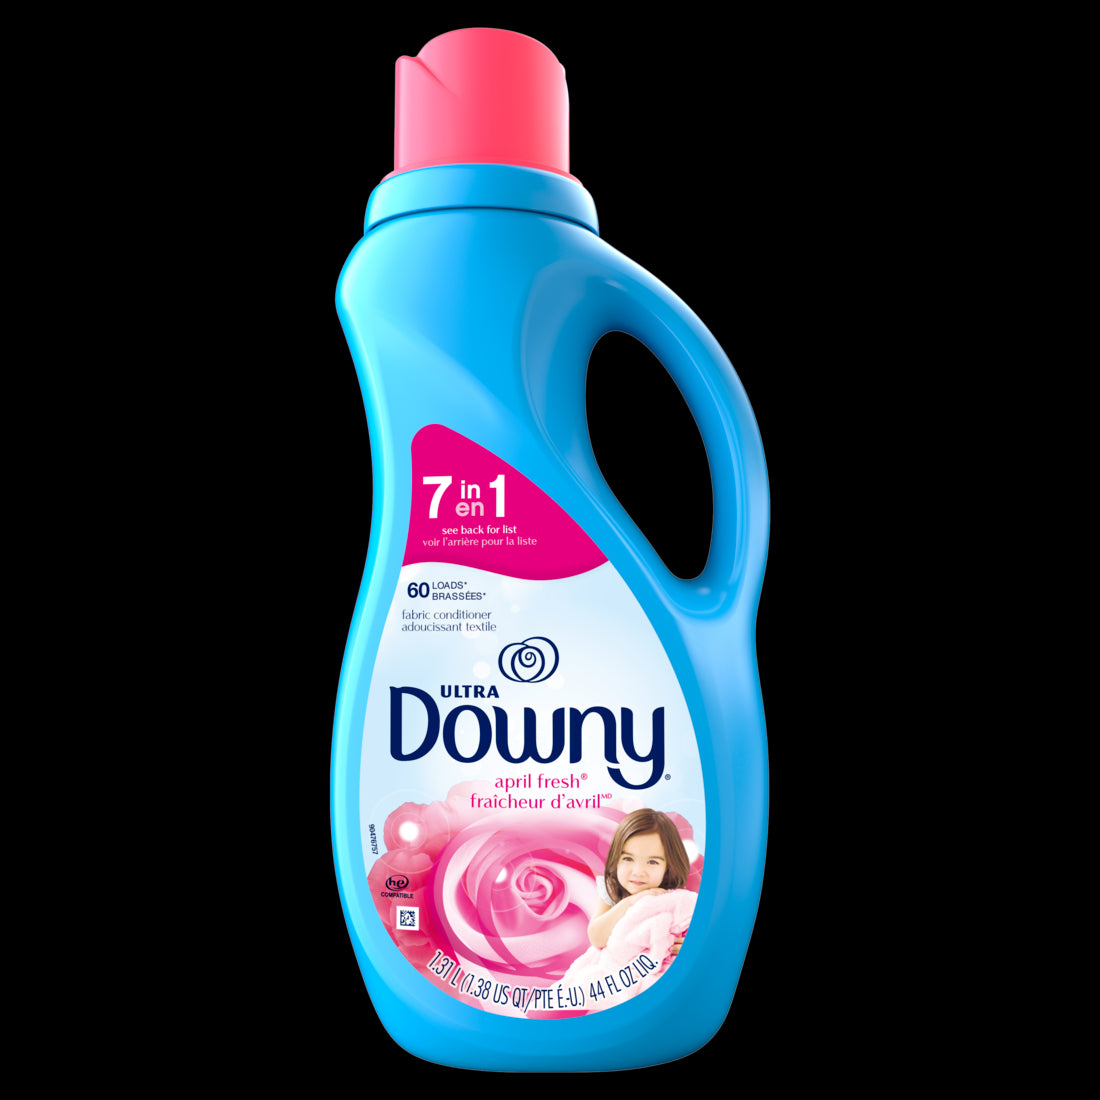 Downy Ultra Laundry Liquid Fabric Softener April Fresh - 44oz/60Loads/4pk